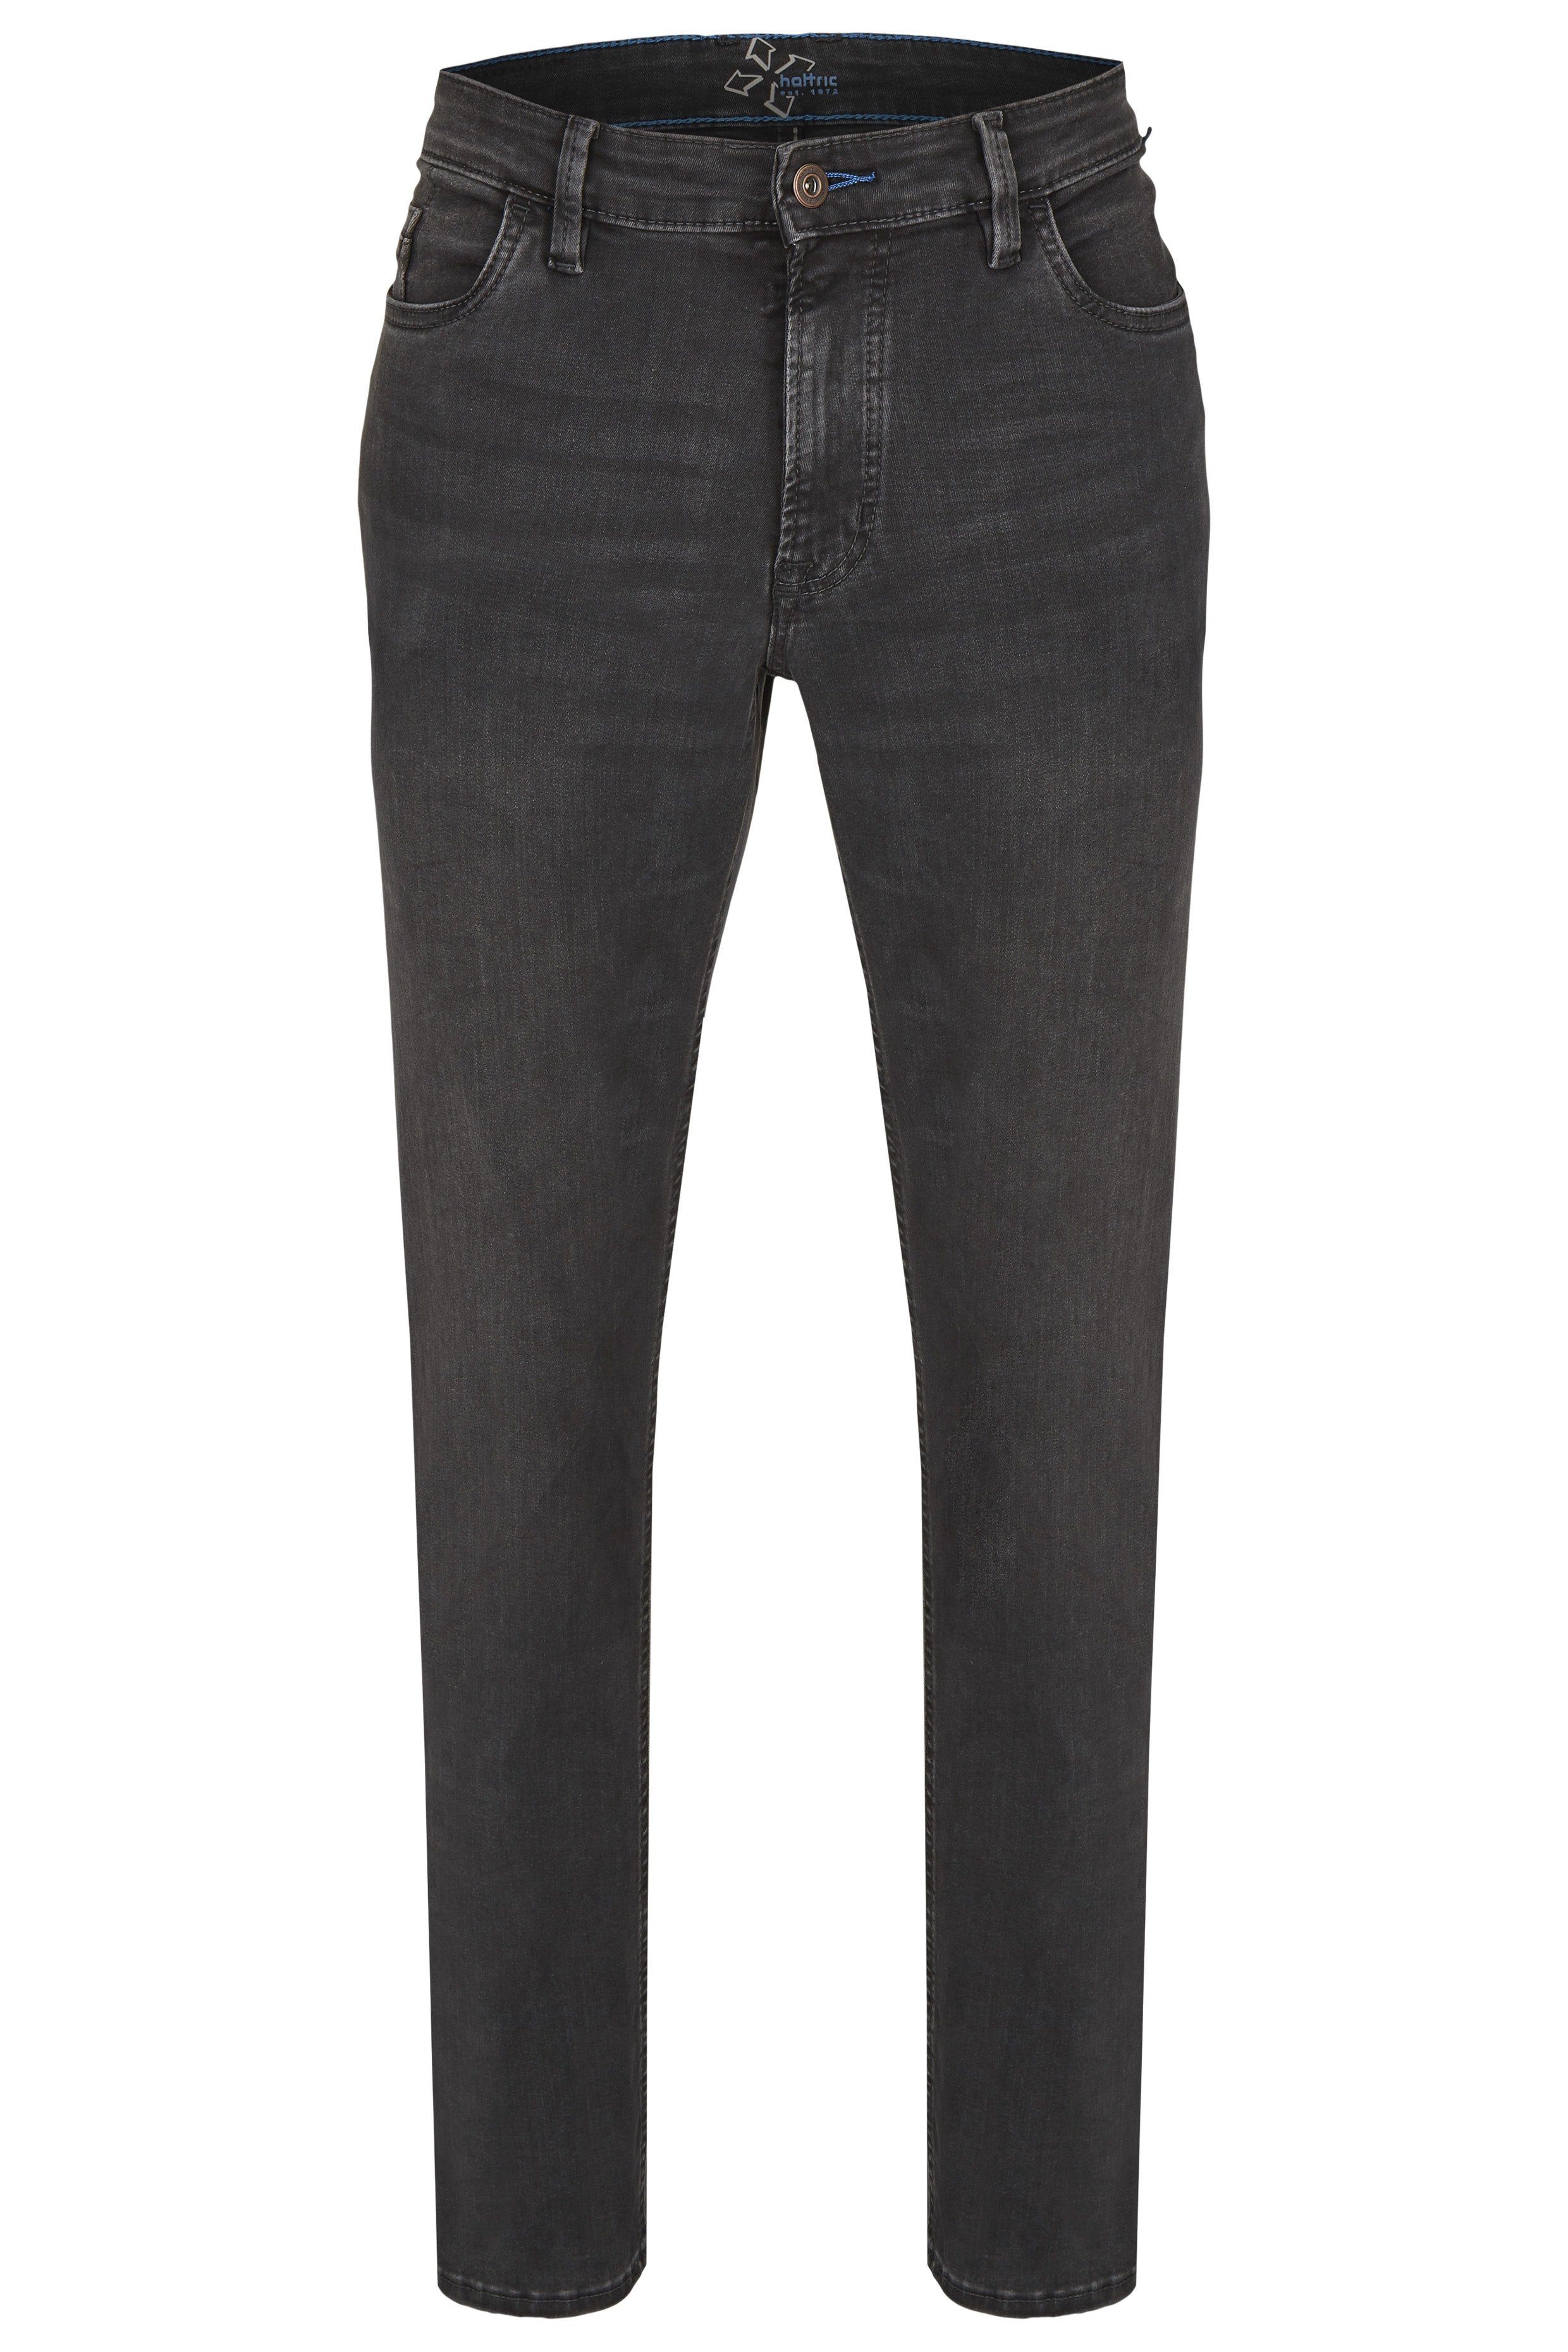 9Y51.07 dark 688985 5-Pocket-Jeans out HATTRIC HUNTER anthra grey washed Hattric